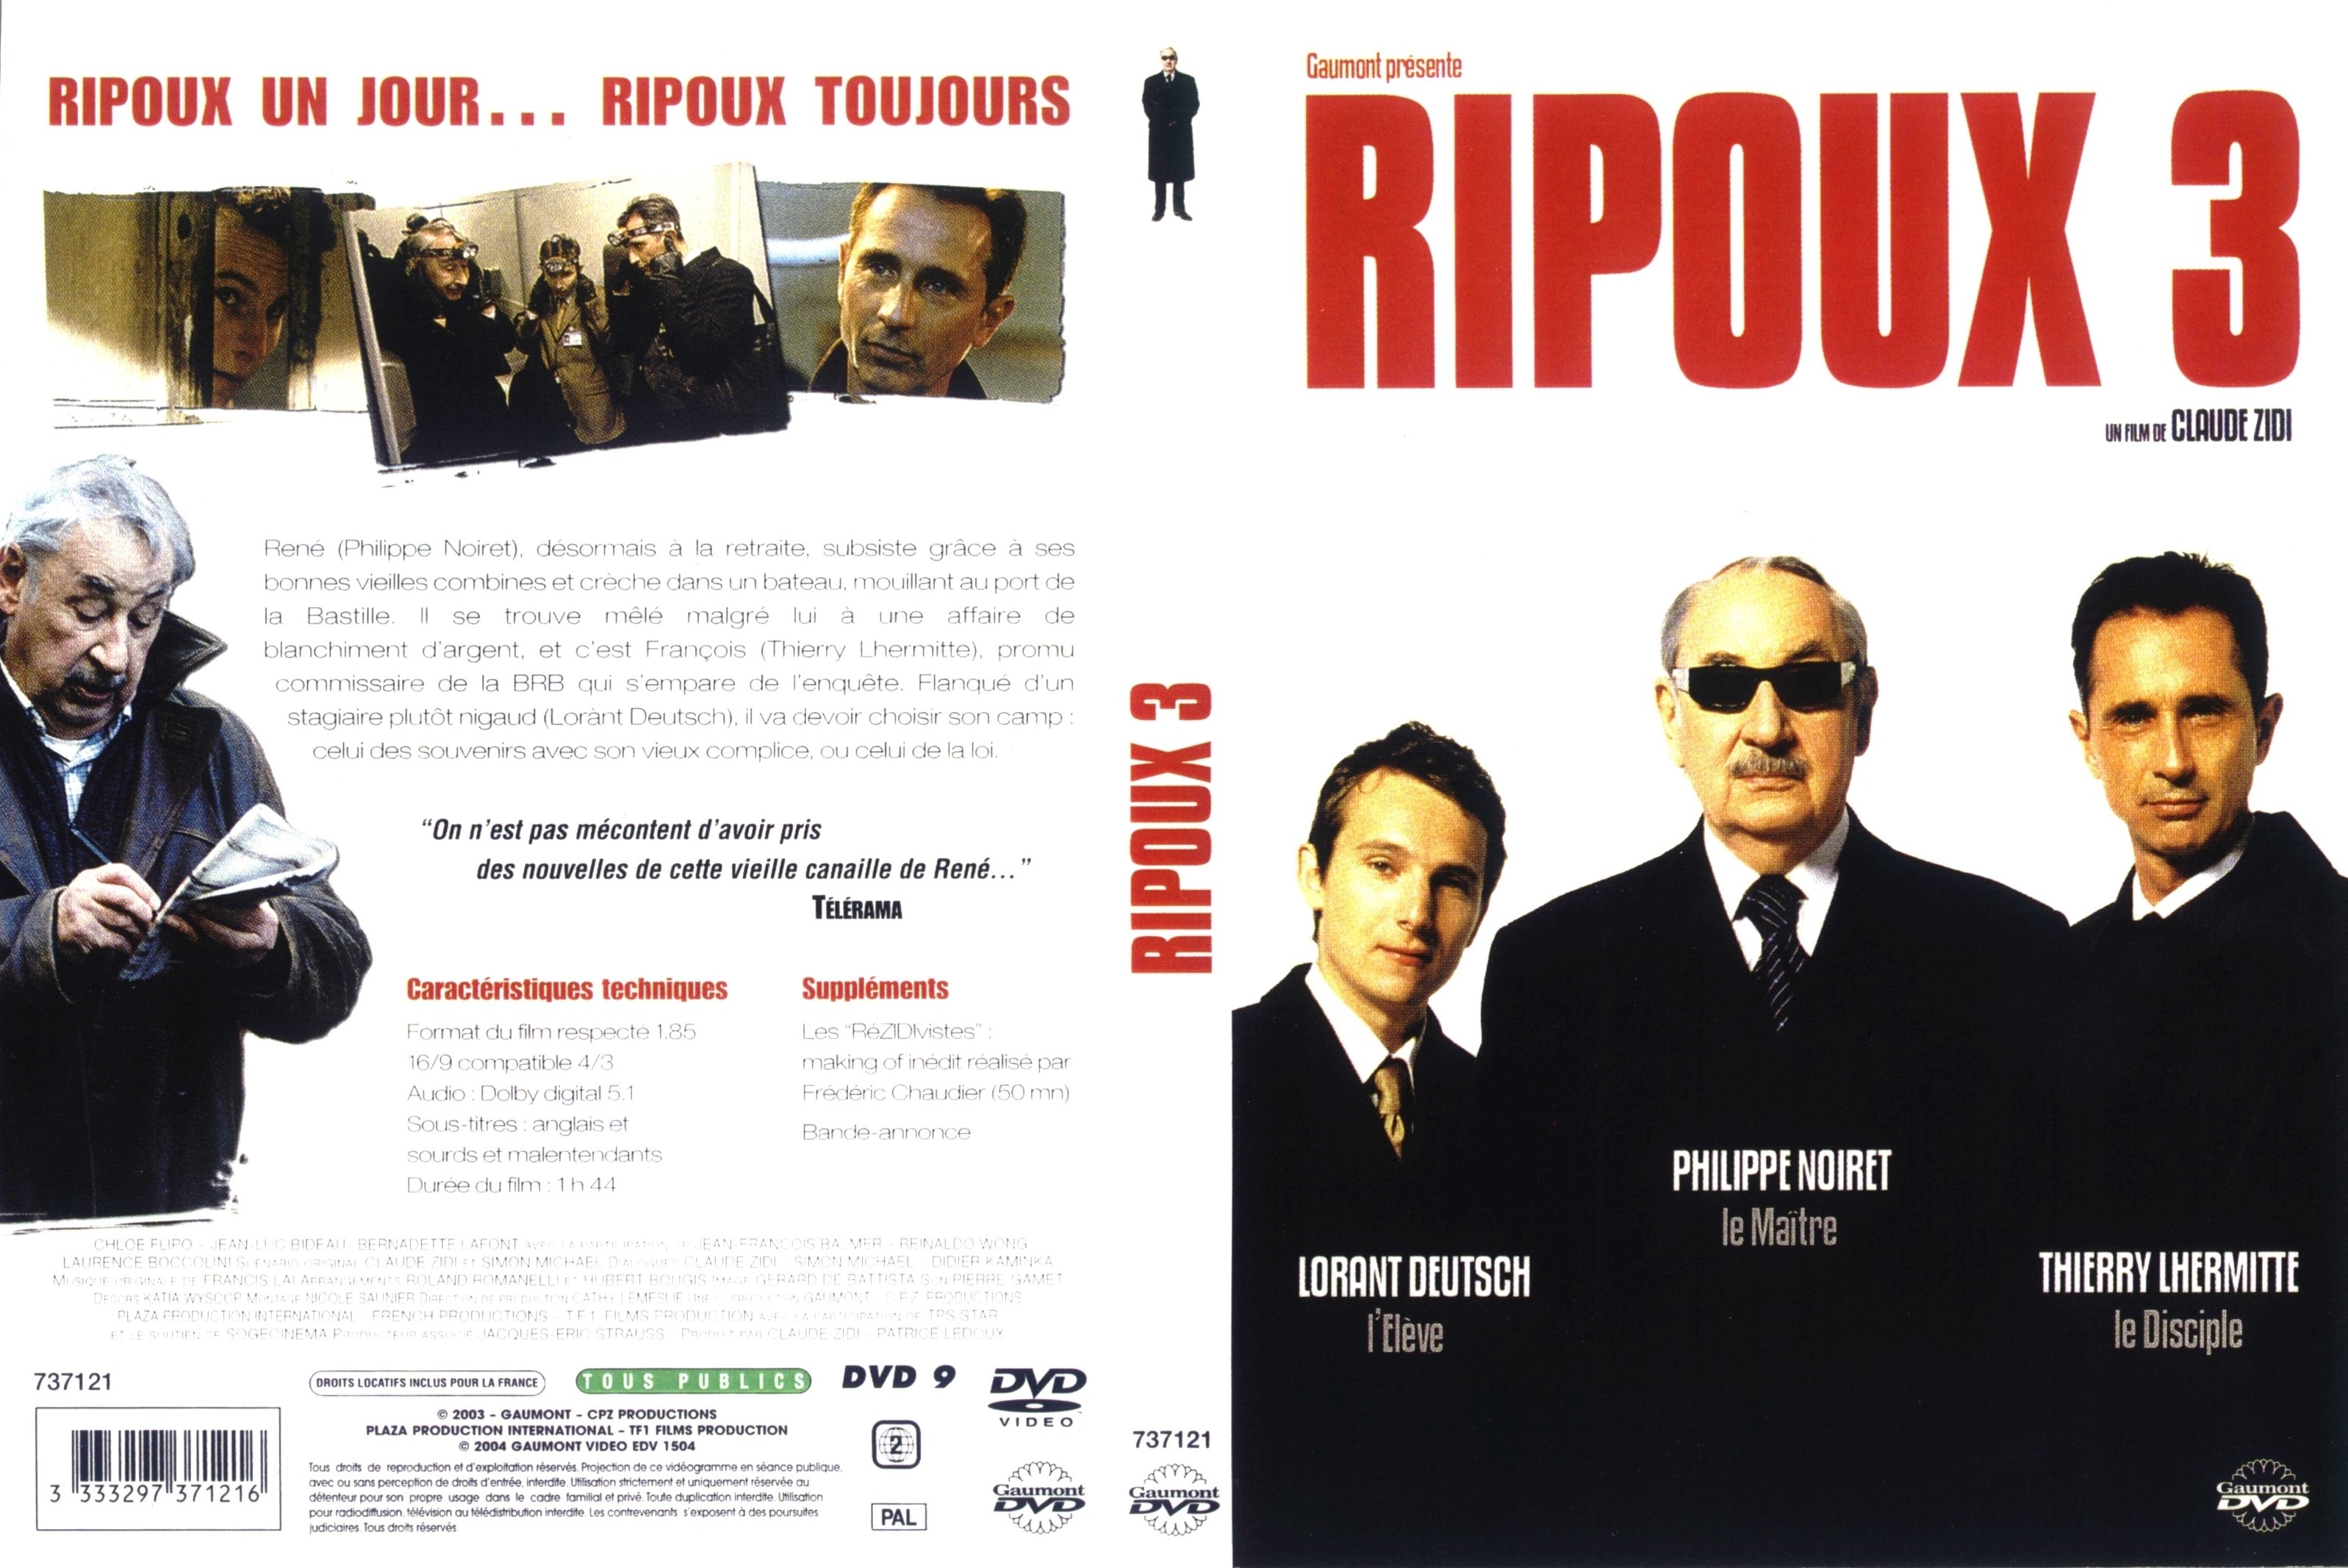 Ripoux 3 movie